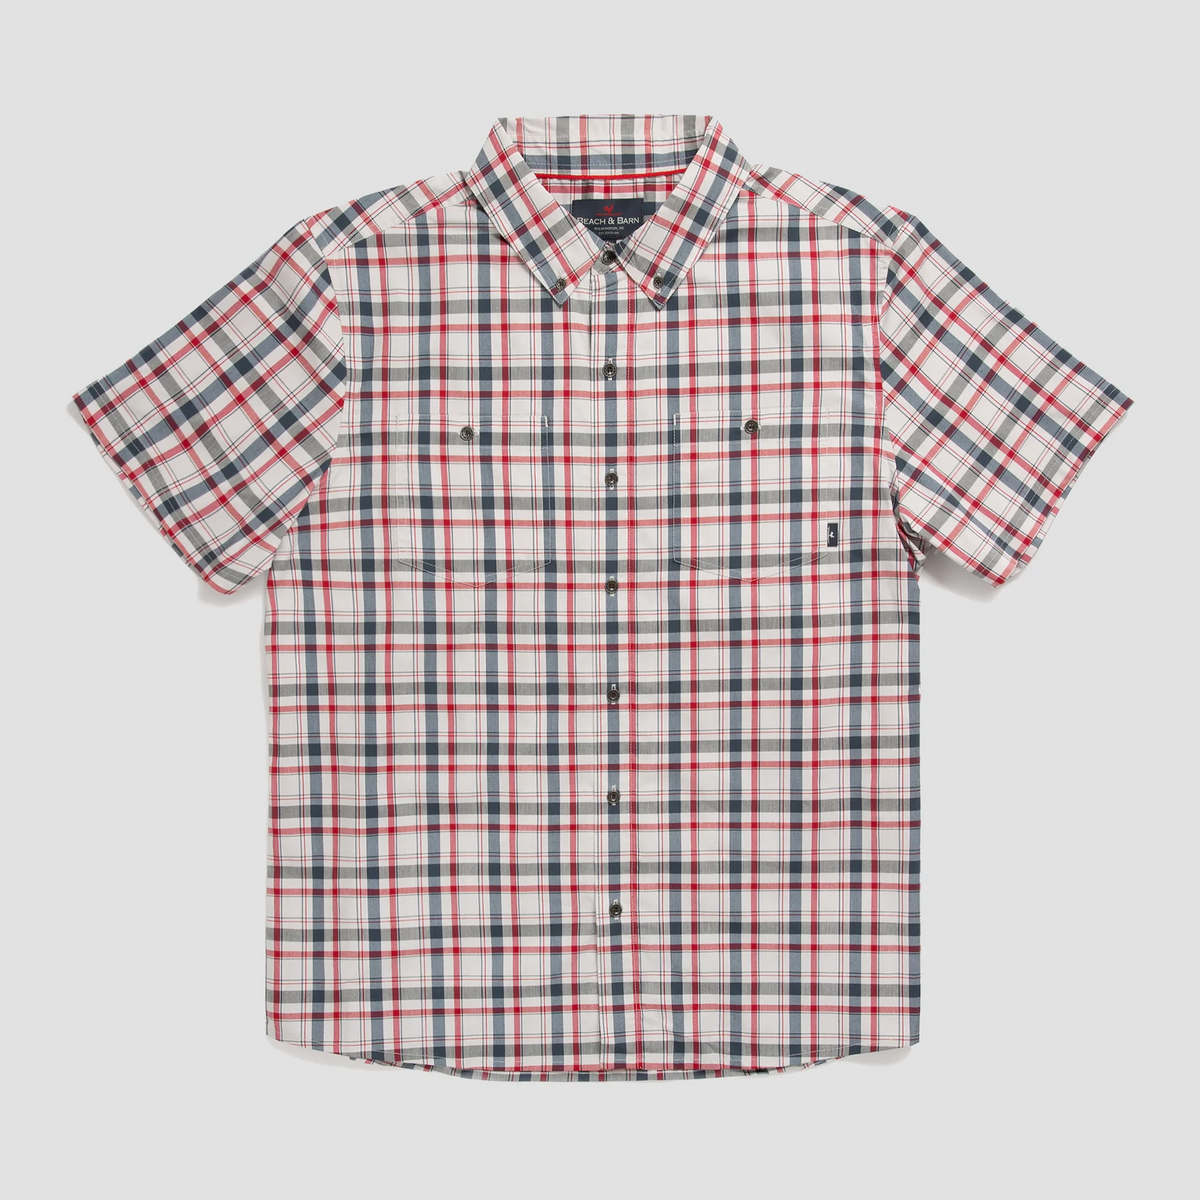 Sale - Double Trouble Short Sleeve Shirt